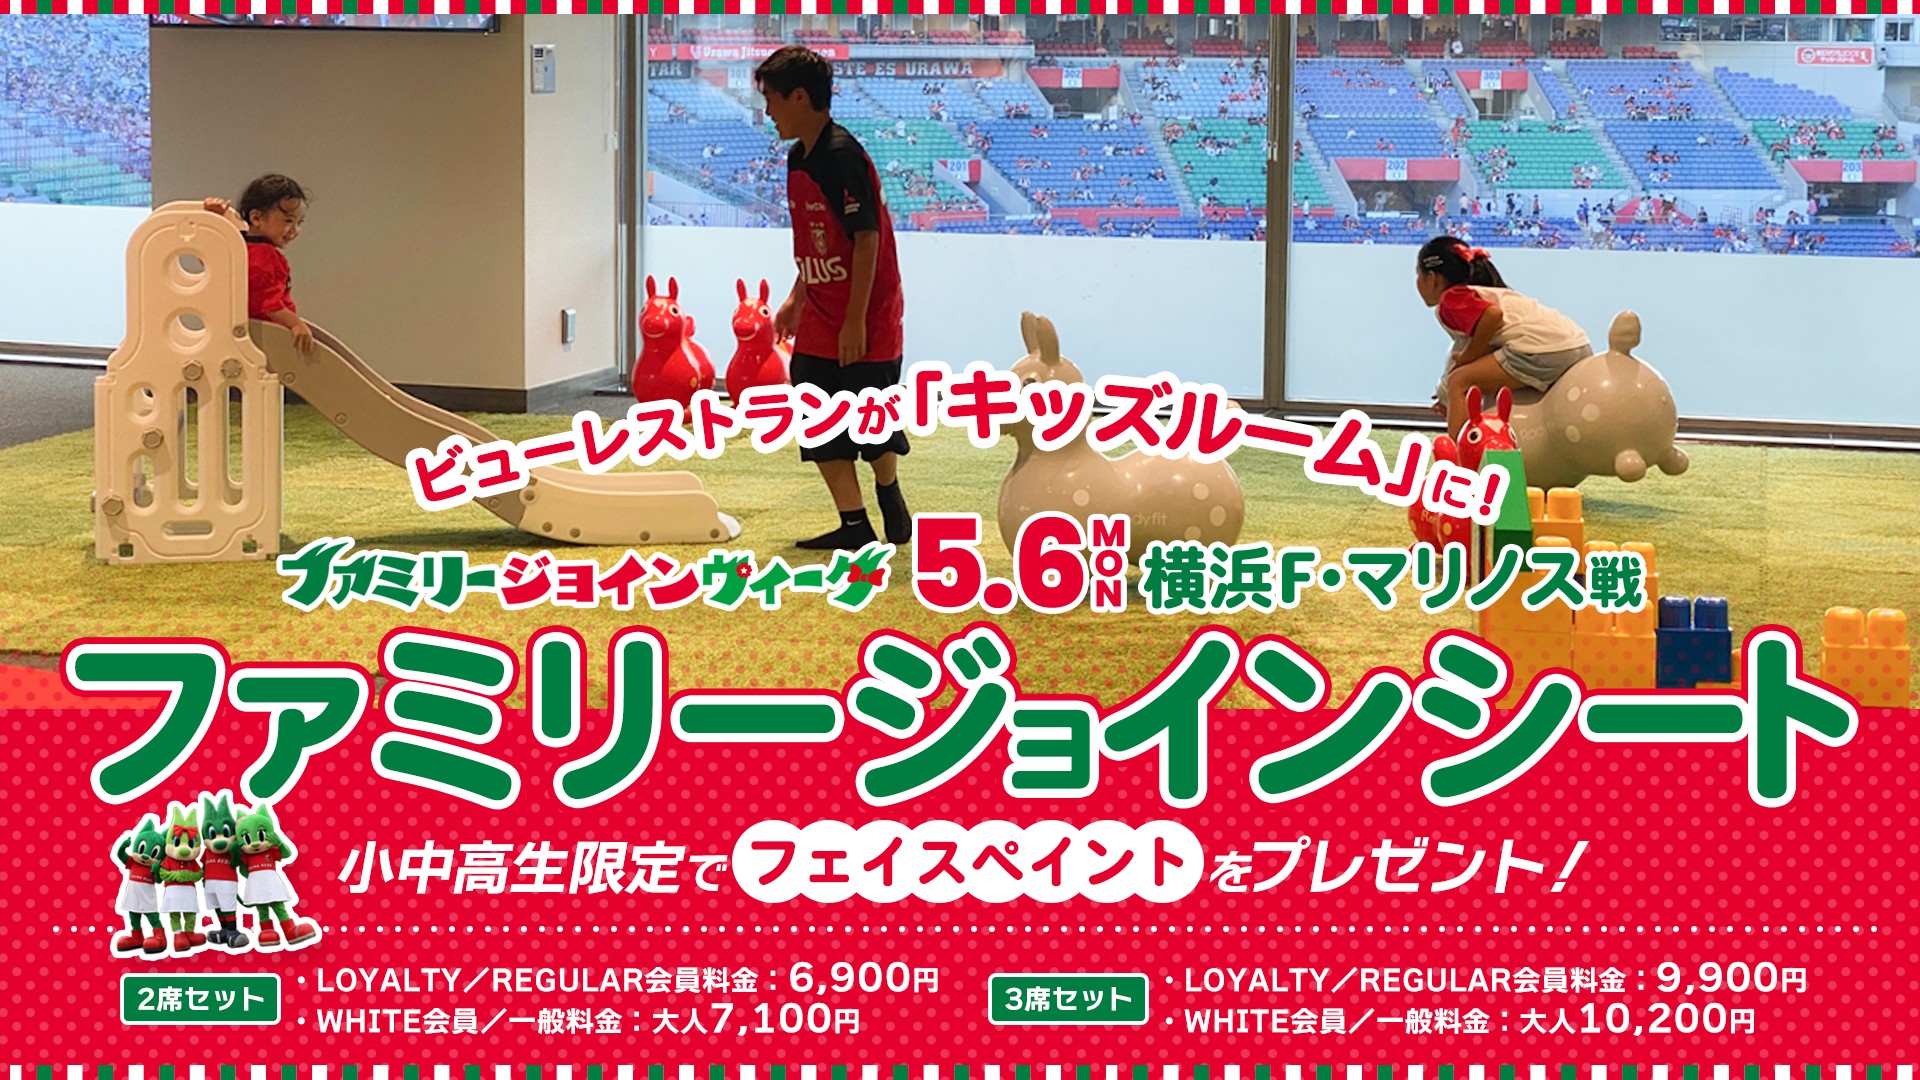 5/6 (Monday/Closed) vs Yokohama F. Marinos Announcement of “Planning Sheet” implementation (Updated 3/28)